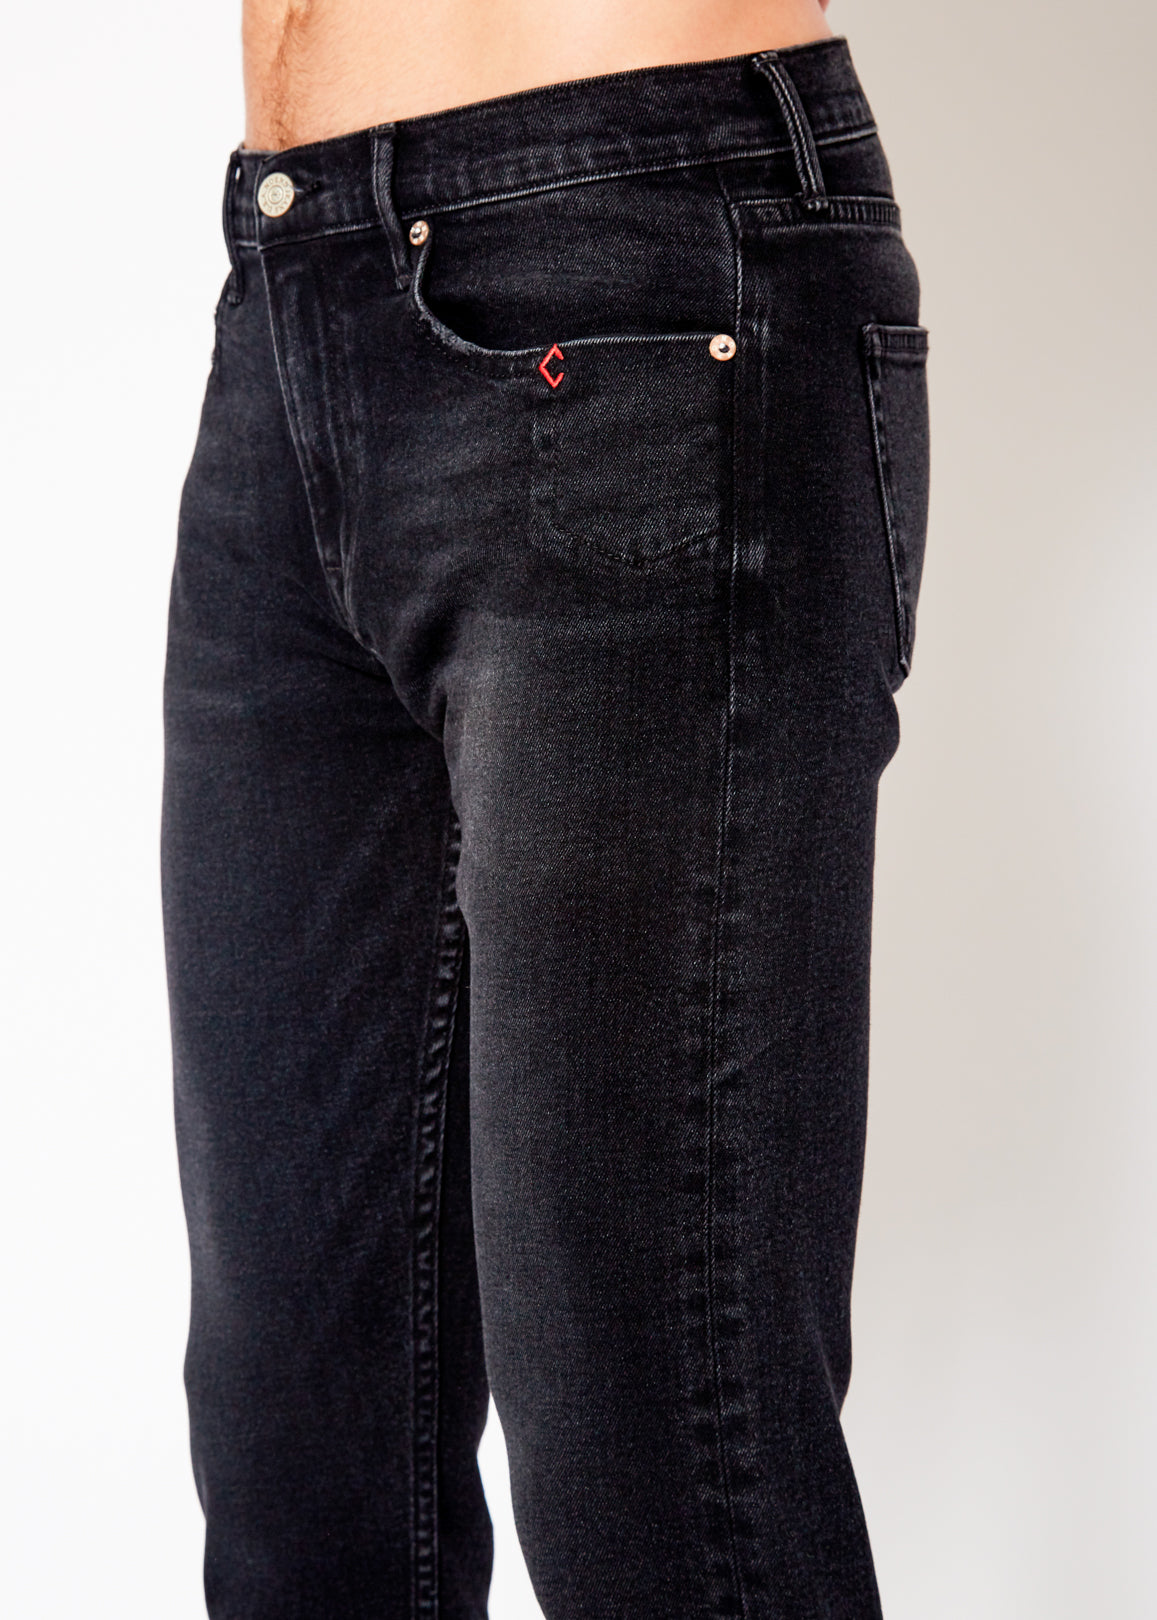 Men's 32 Inseam Tucson Stretch Straight Jeans In Washed Black - Noend Denim